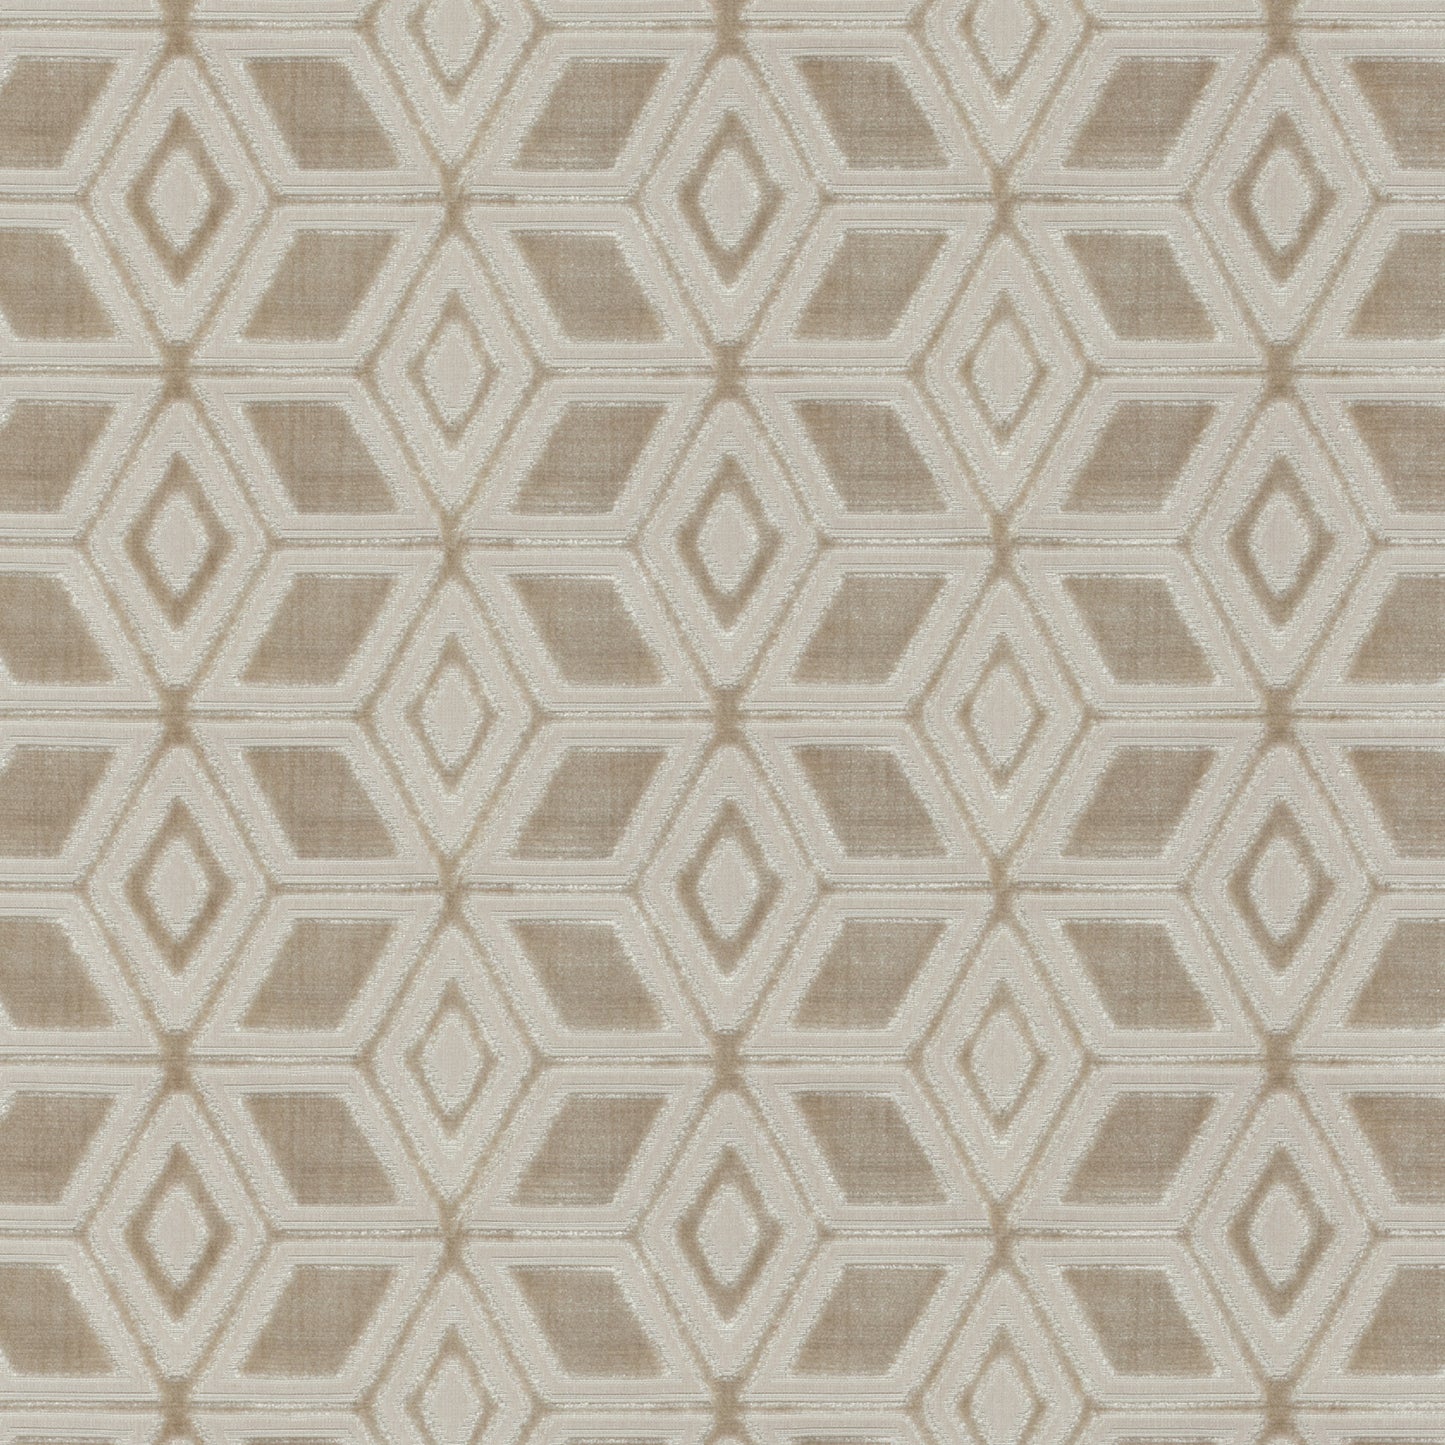 Purchase  Ann French Fabric Item AW72987  pattern name  Jardin Maze Velvet